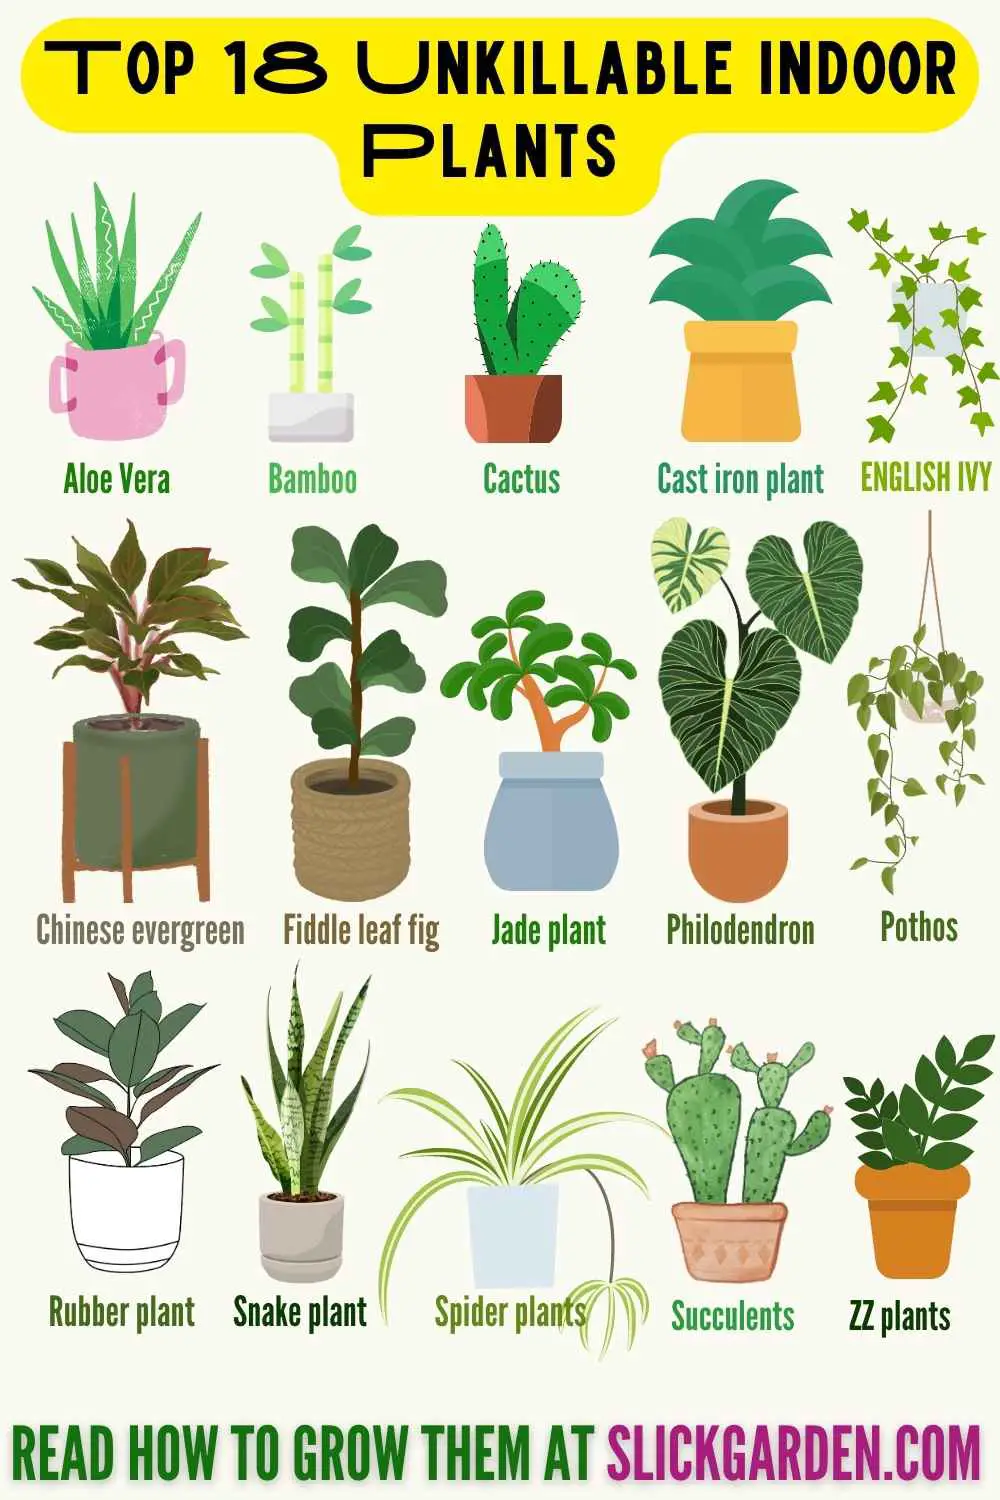 Top 18 Unkillable Indoor Plants  infographic